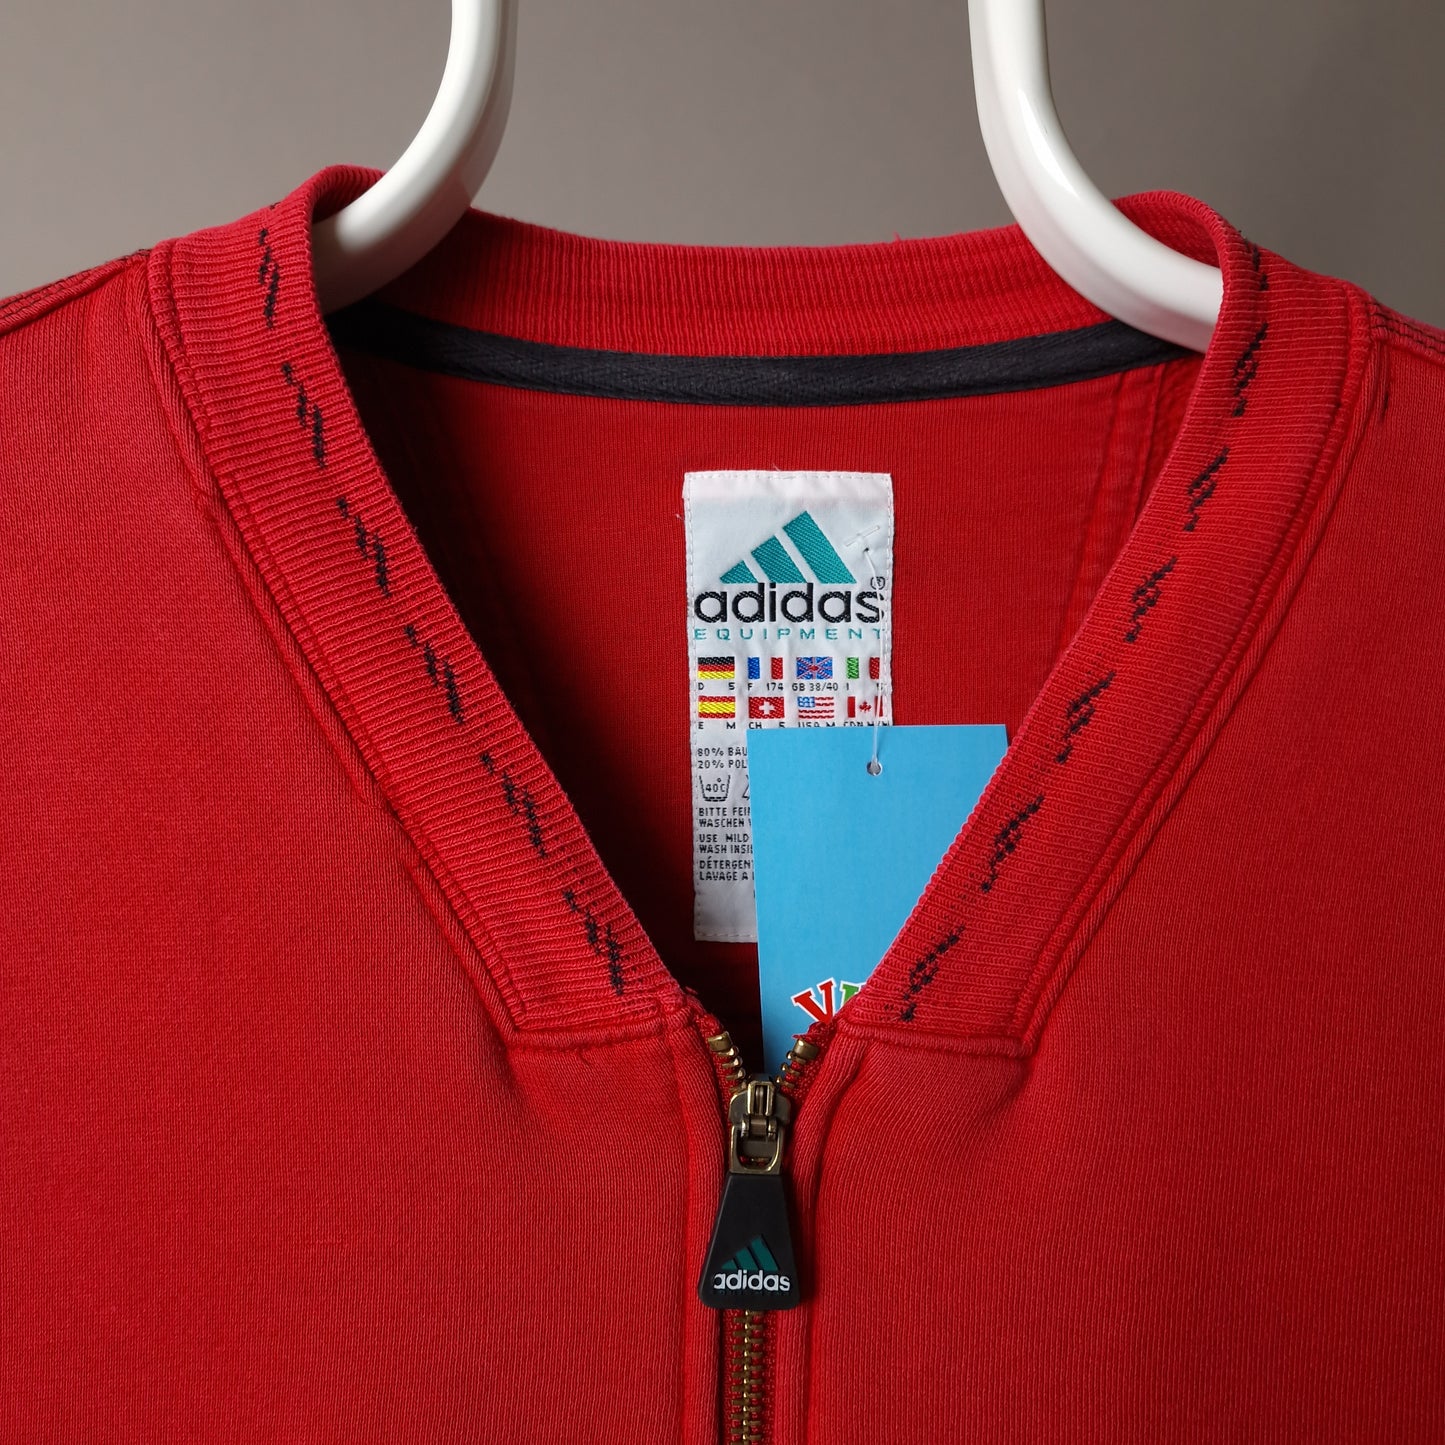 Vintage Adidas Equipment zip up sweatshirt in red - medium